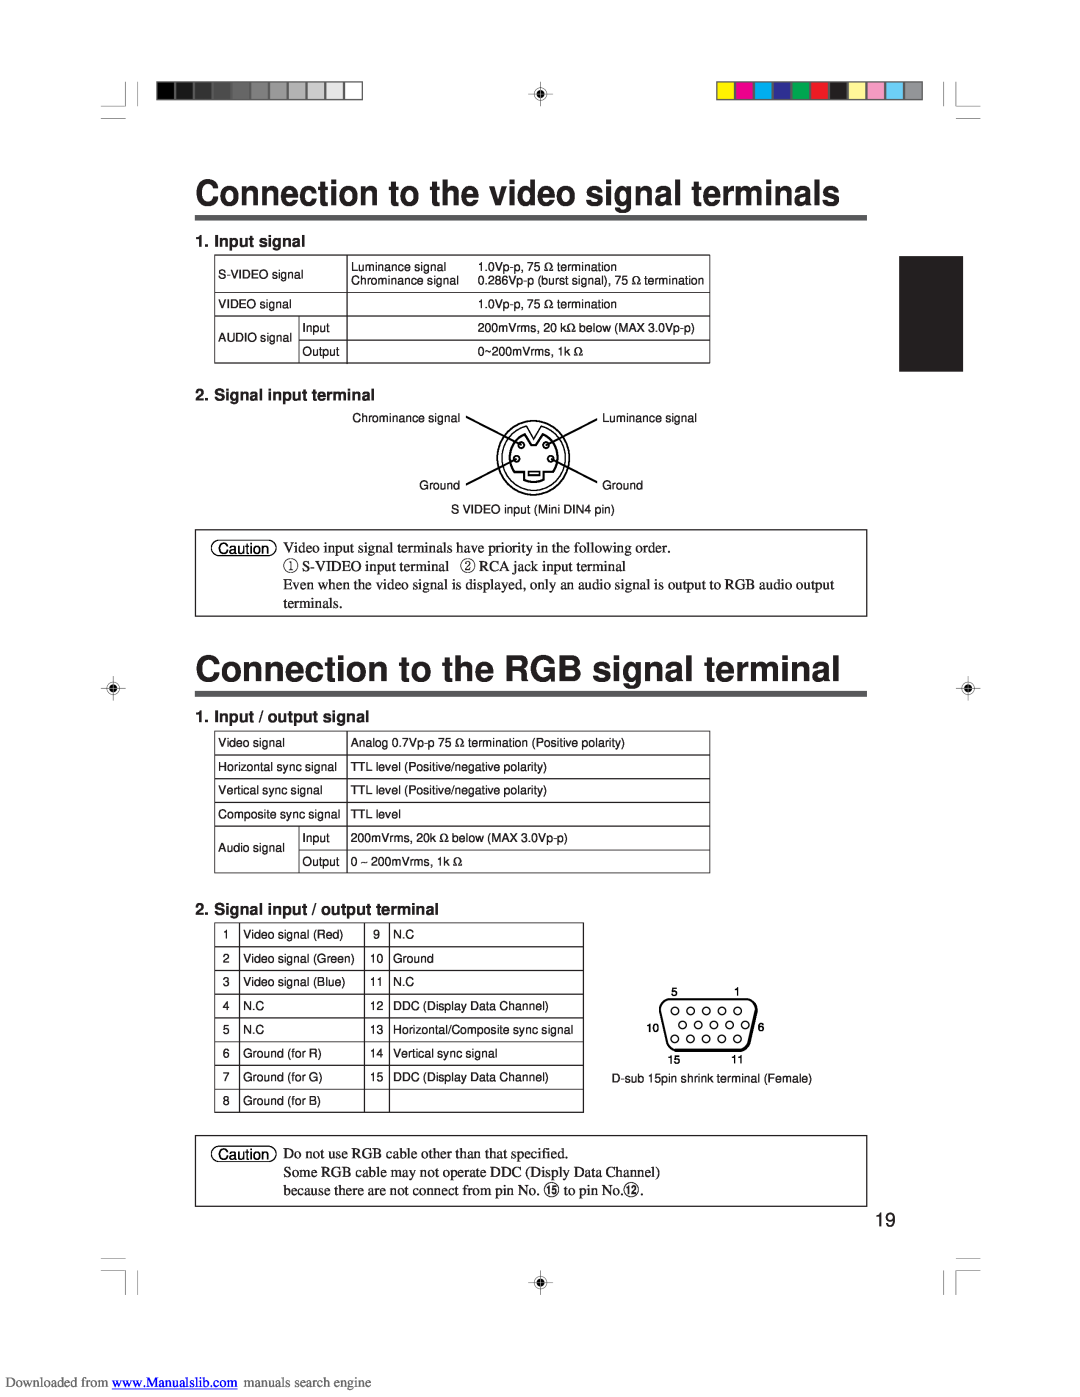 Hitachi CP-X955E Connection to the video signal terminals, Connection to the RGB signal terminal, Input signal 